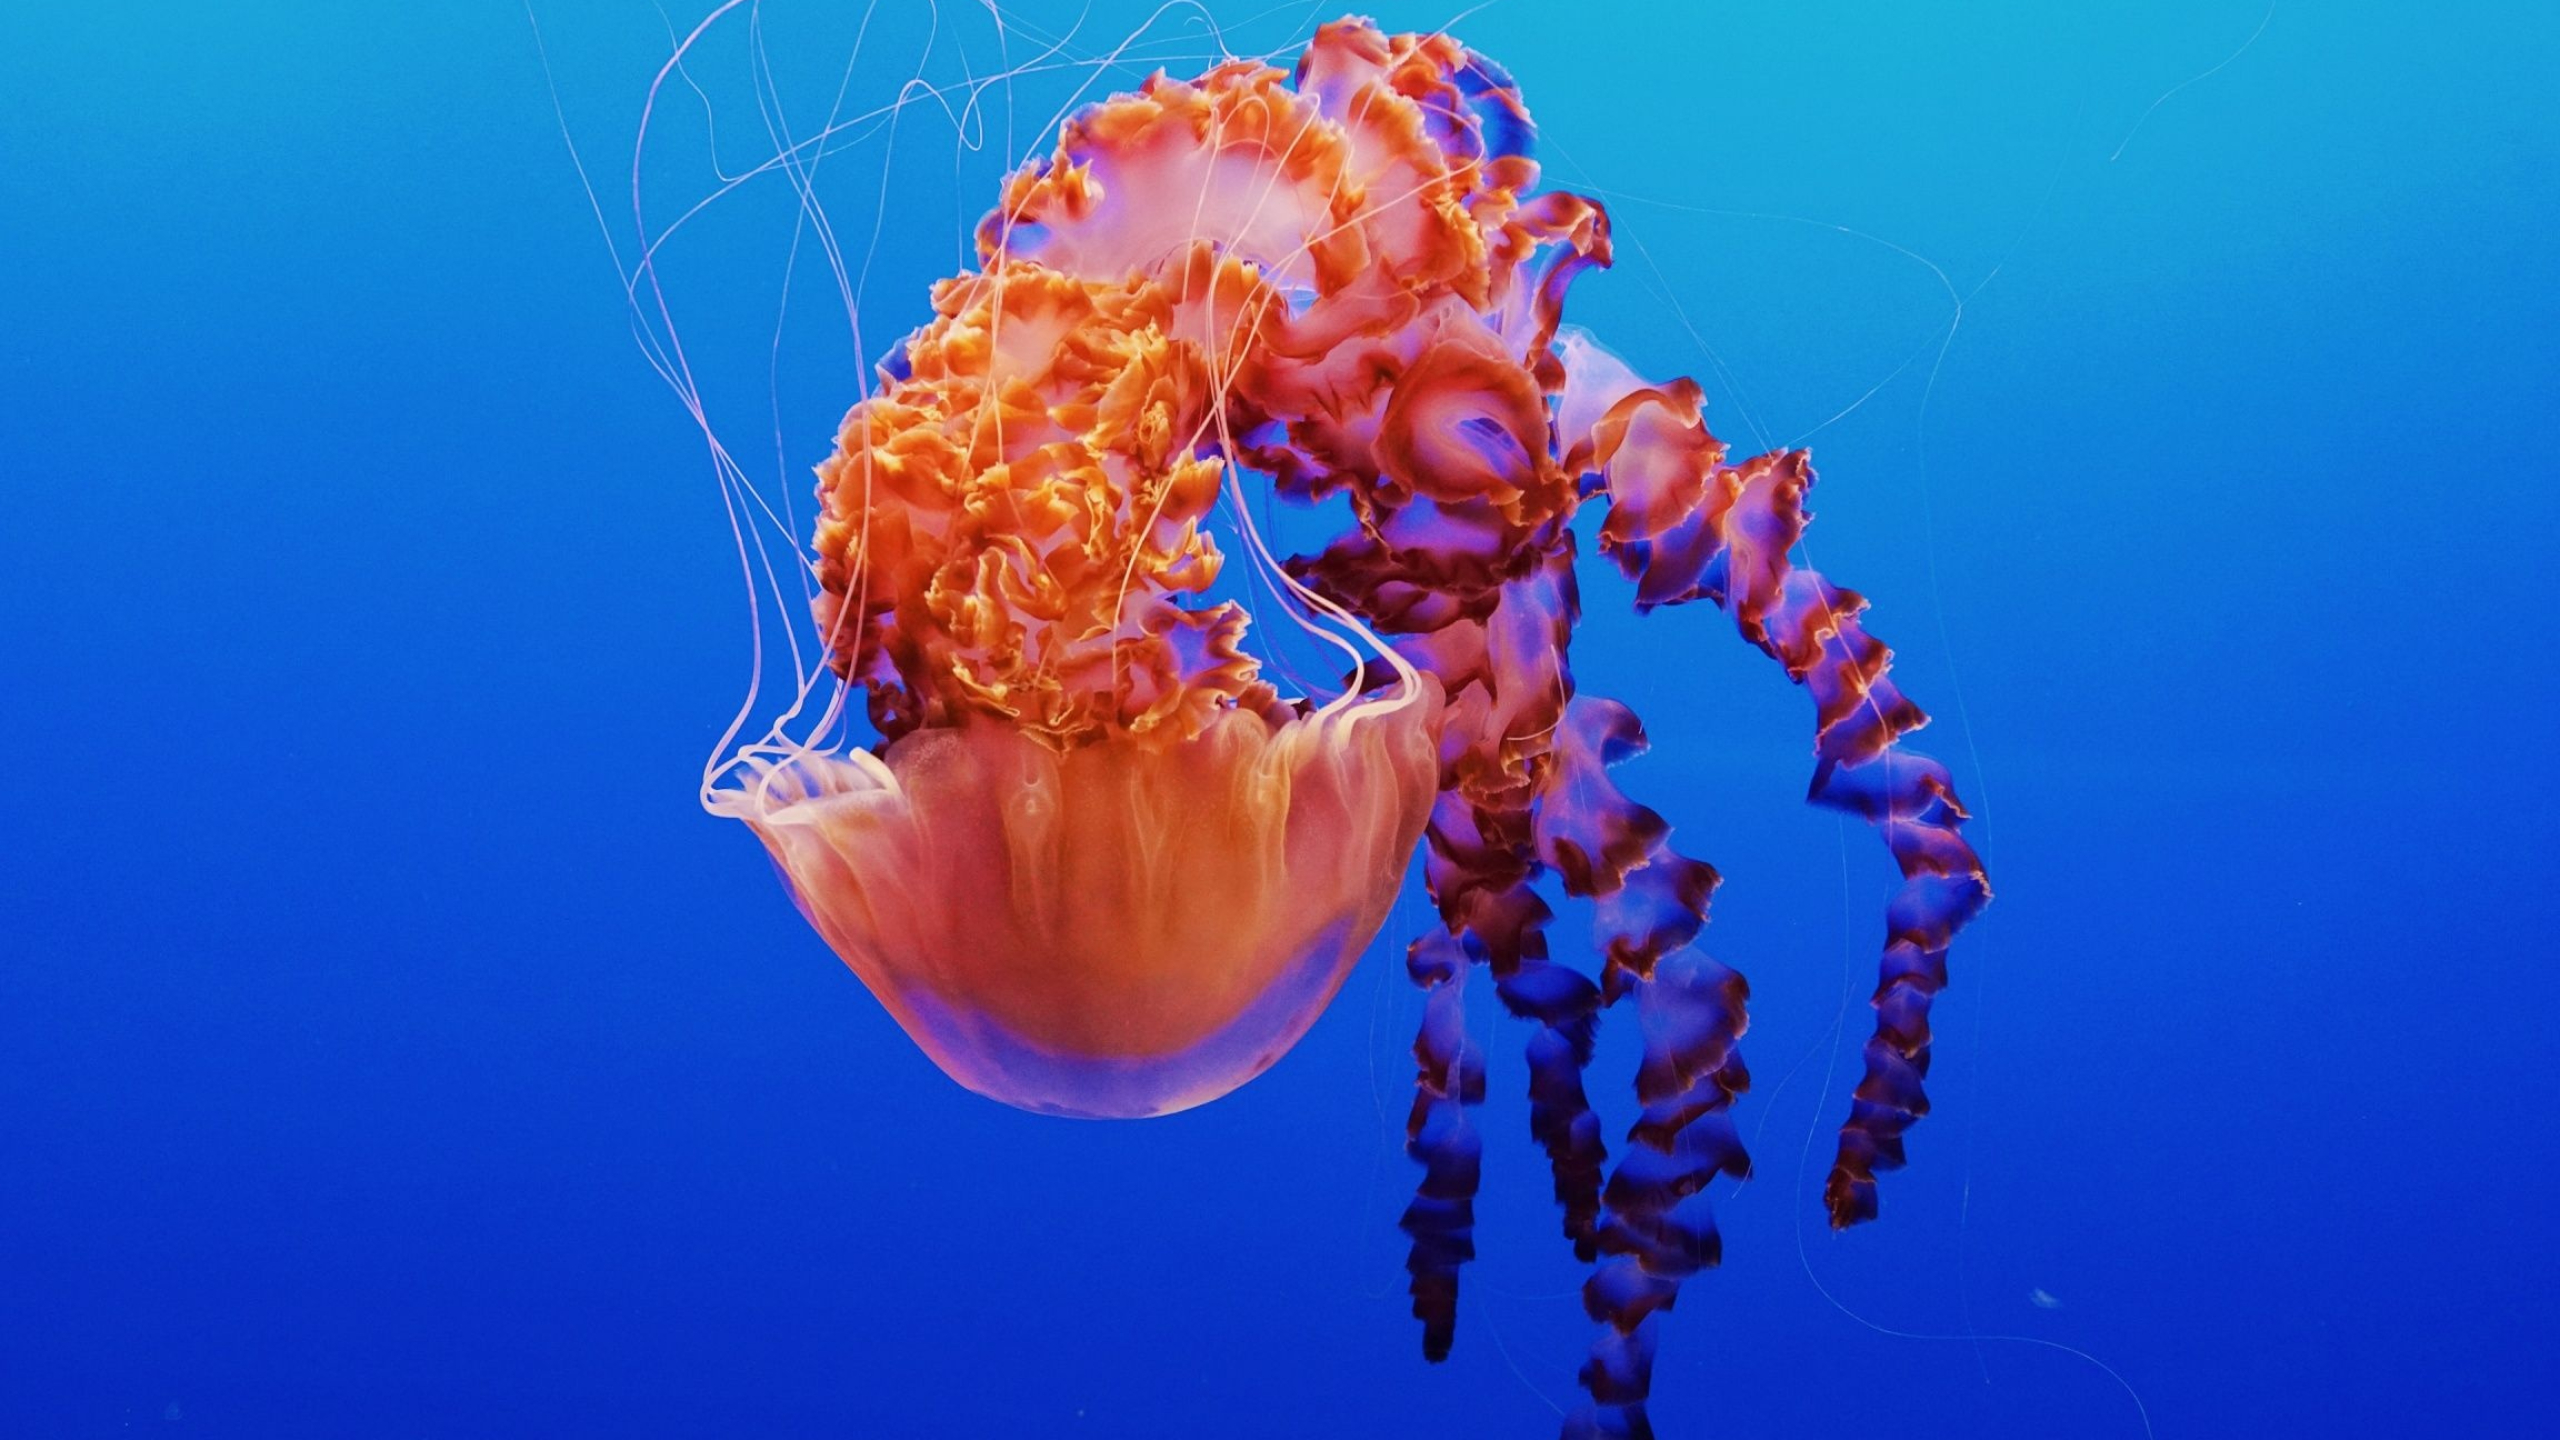 Exquisite jellyfish, Desktop favorites, Wallpaper treasures, Jellyfish desktop wallpapers, 2560x1440 HD Desktop